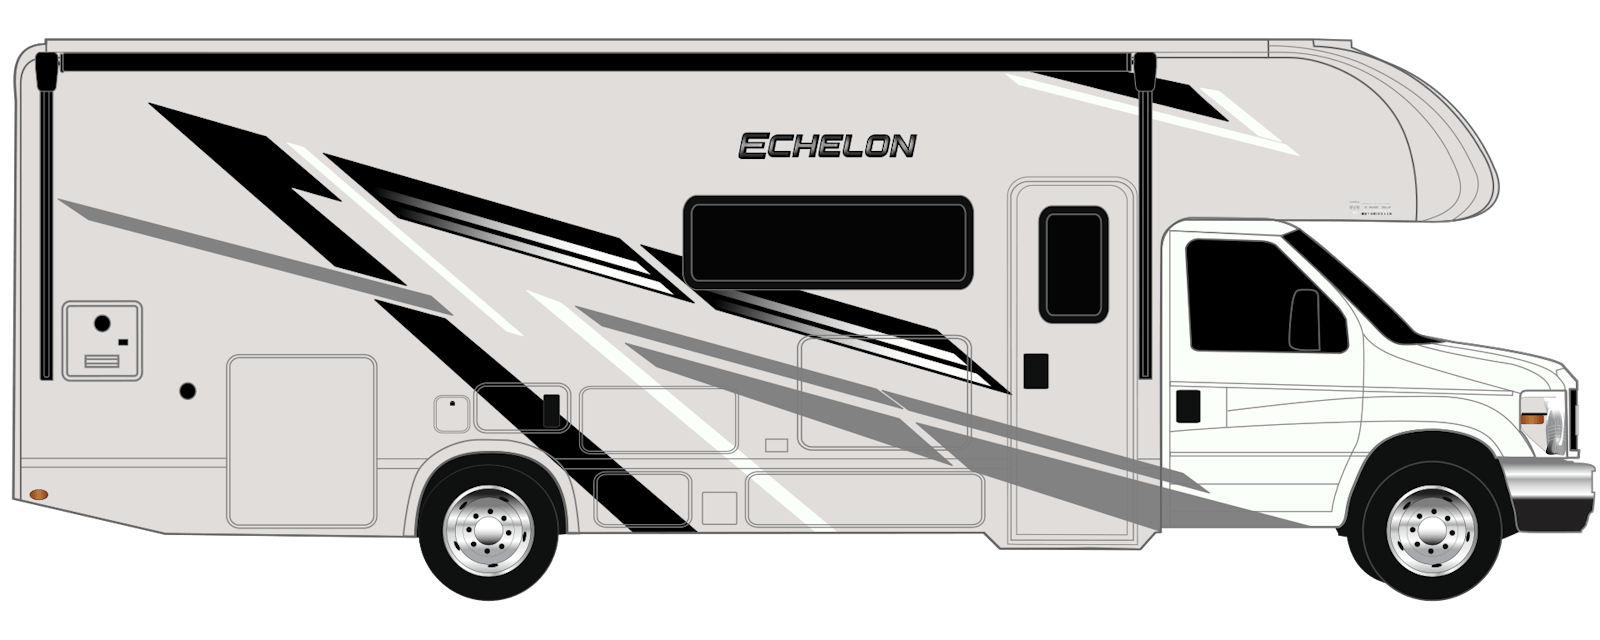 Echelon Standard graphics